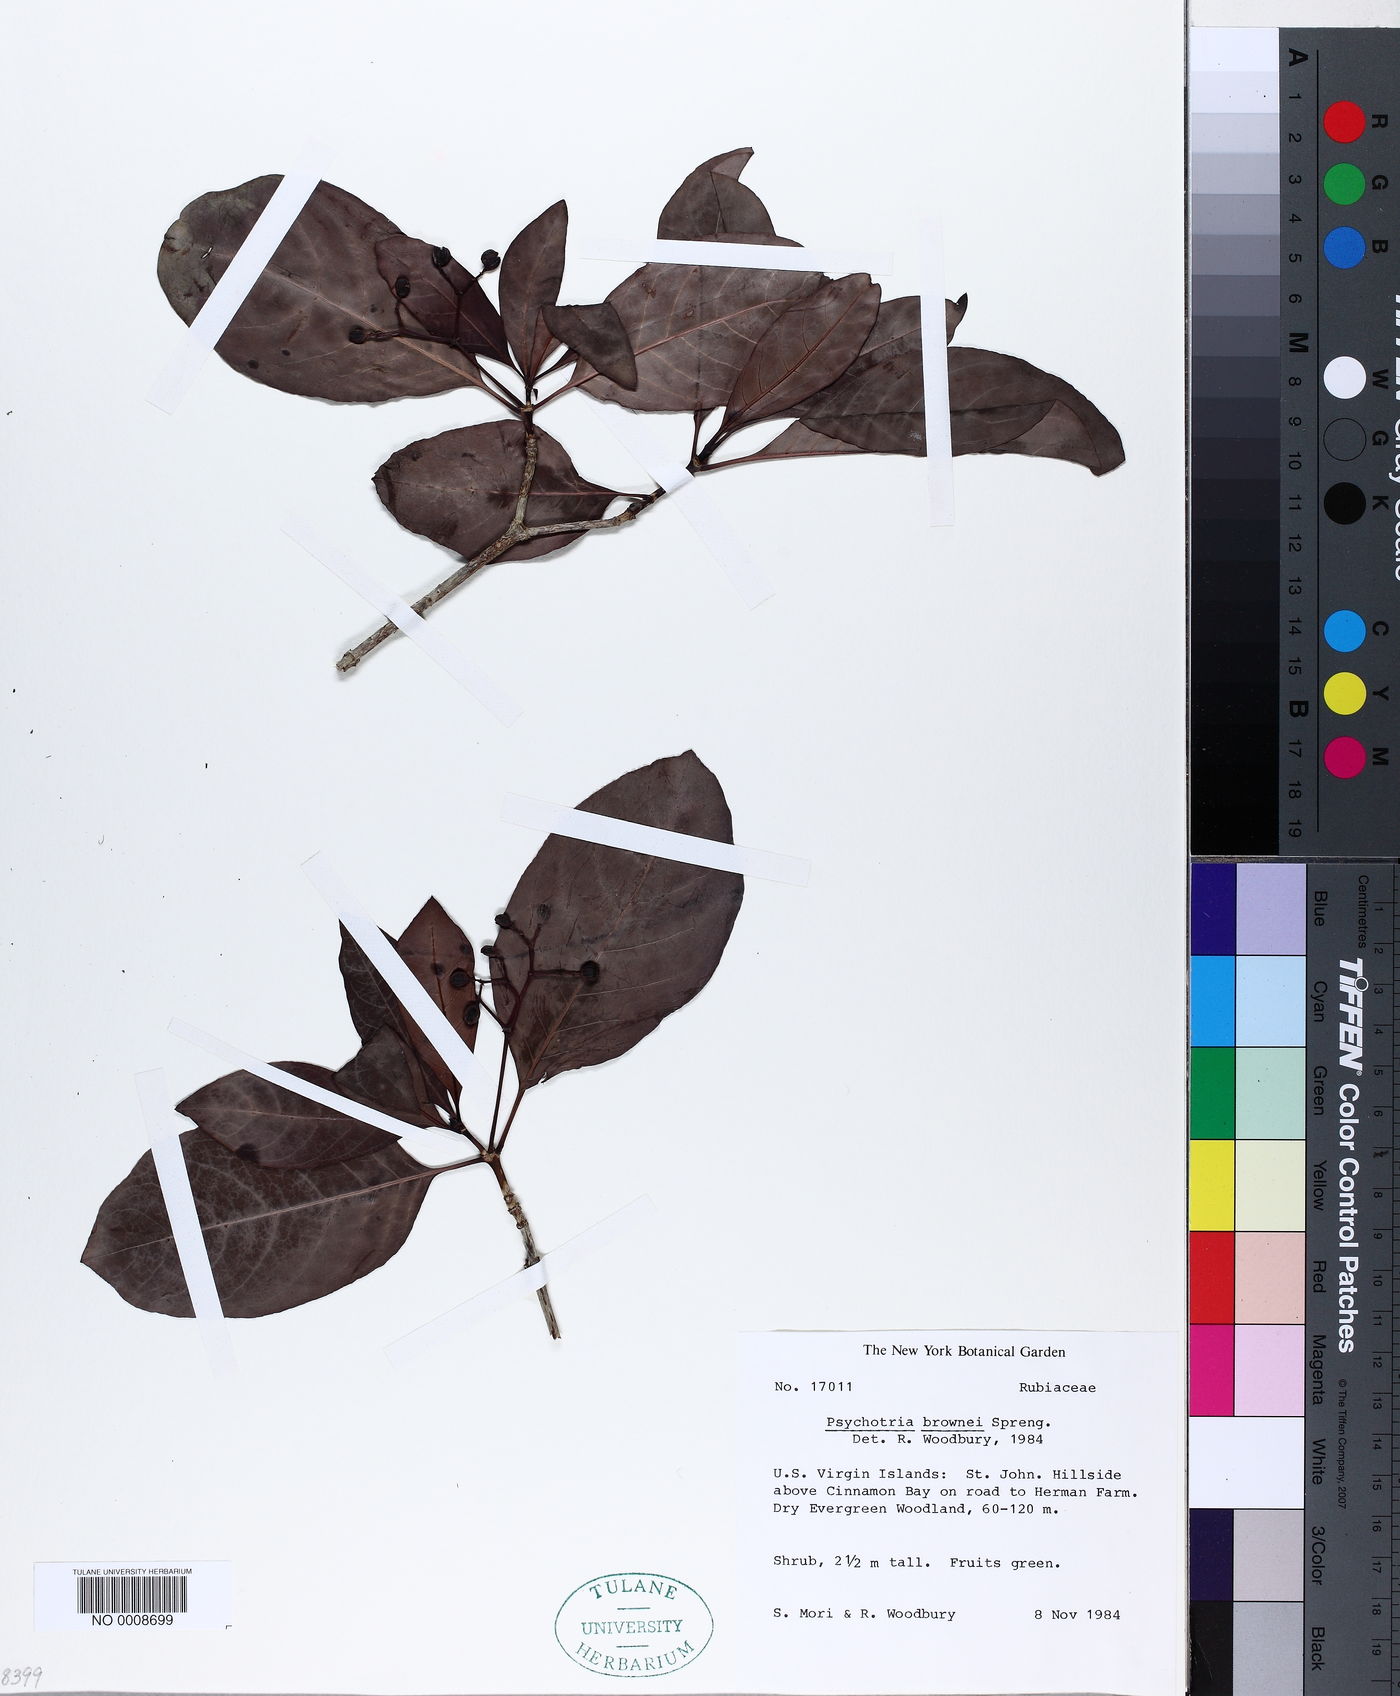 Psychotria brownei image